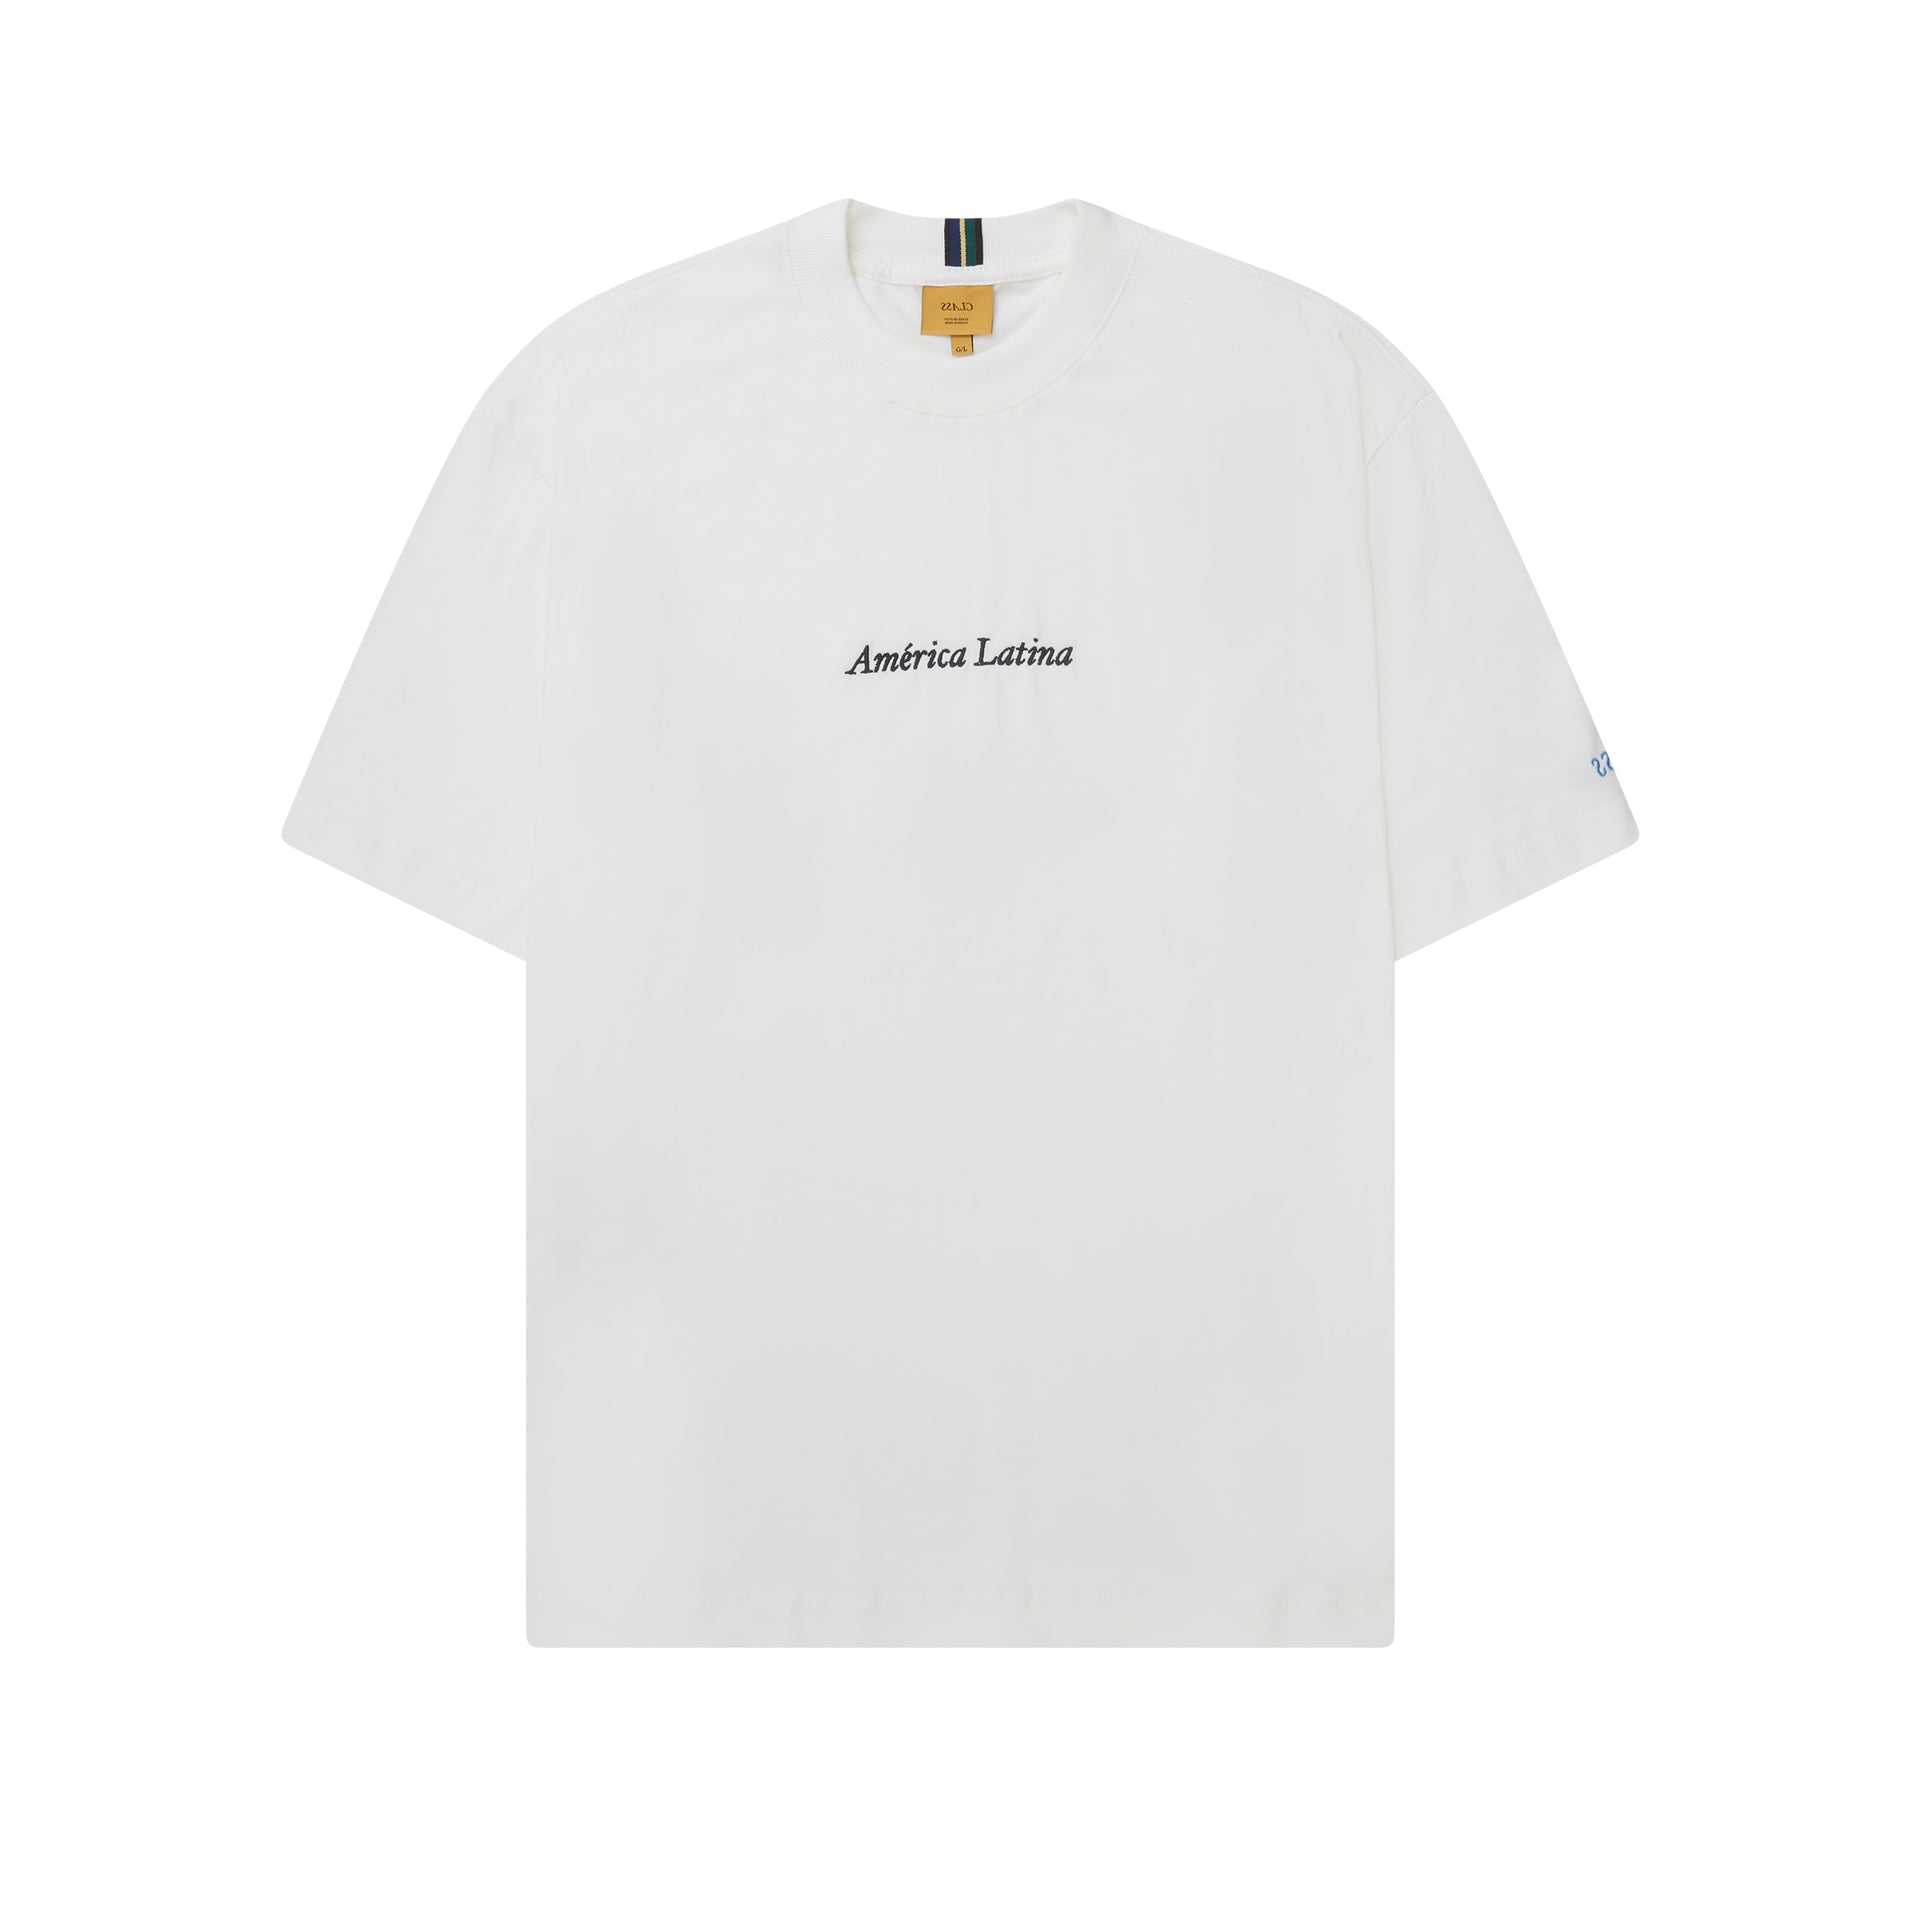 CLASS - Camiseta América Latina "Off White"